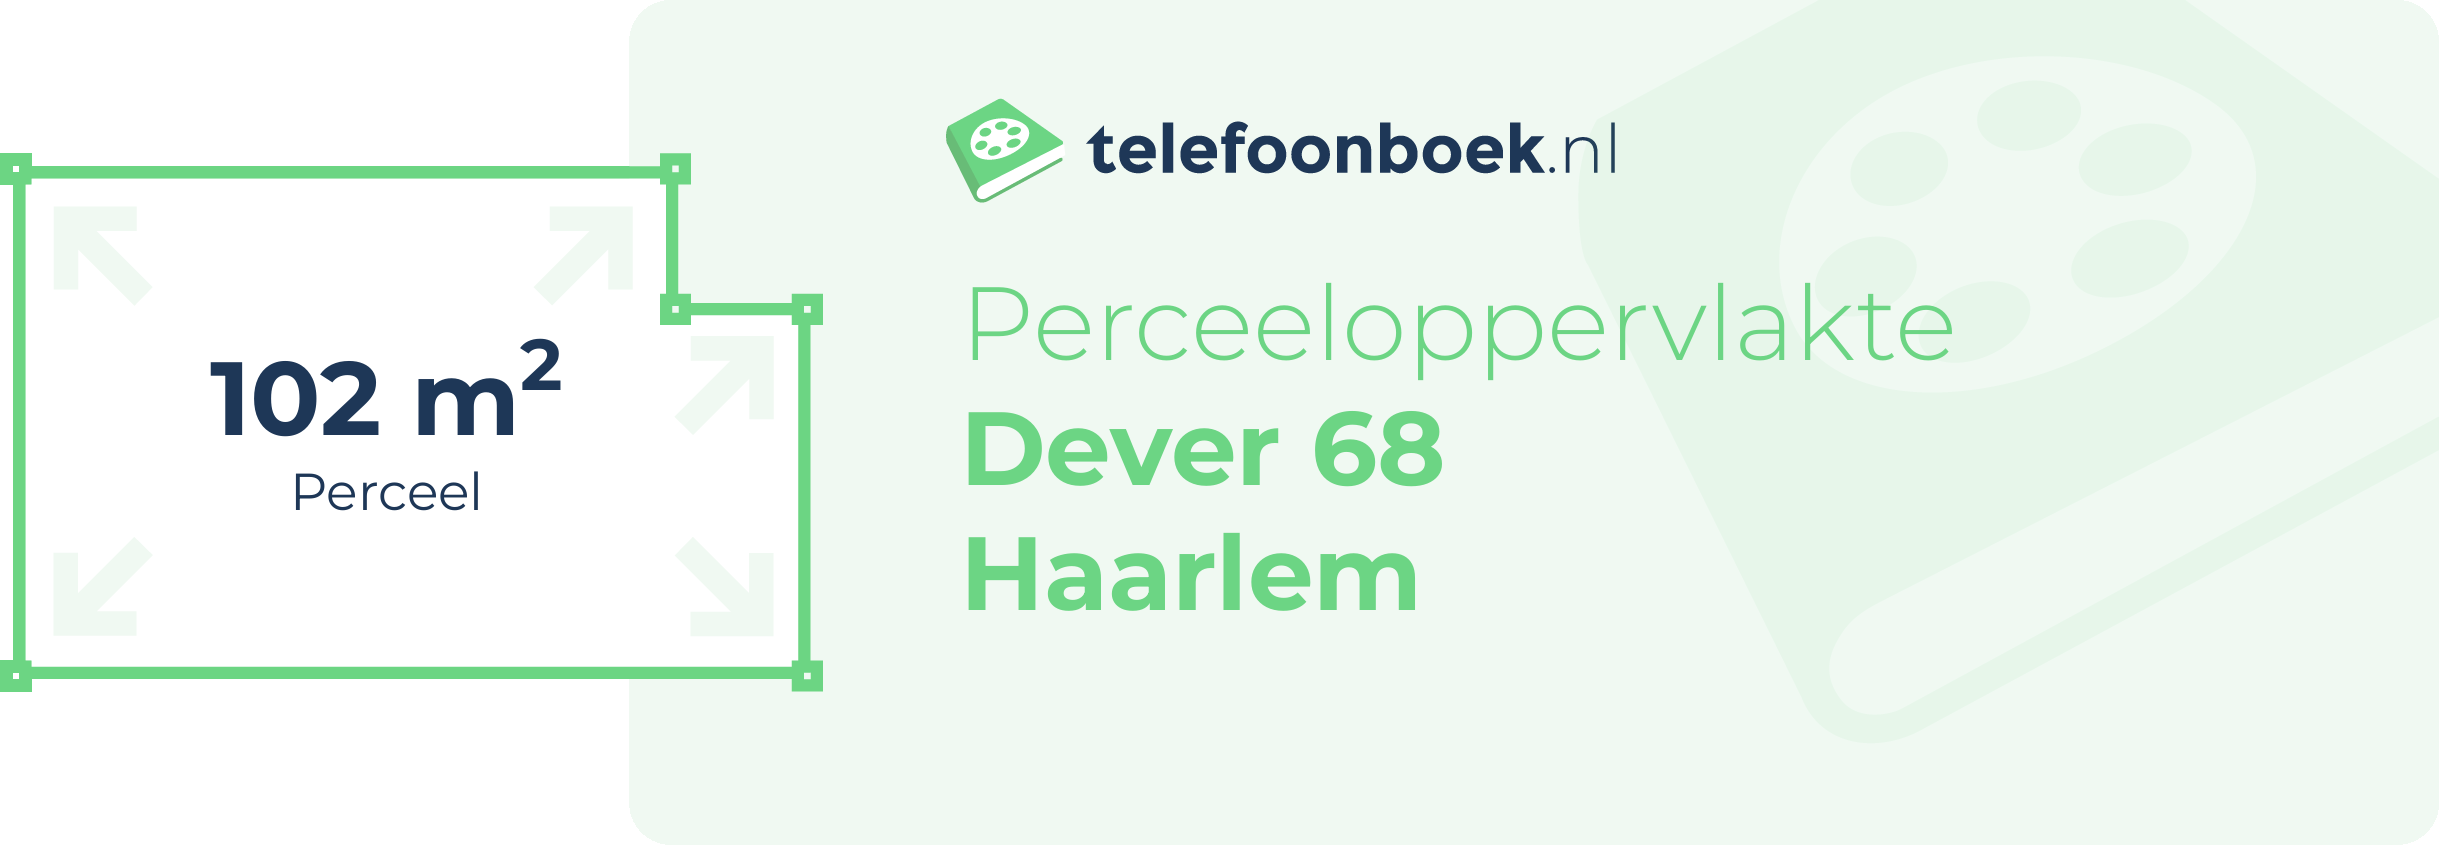 Perceeloppervlakte Dever 68 Haarlem